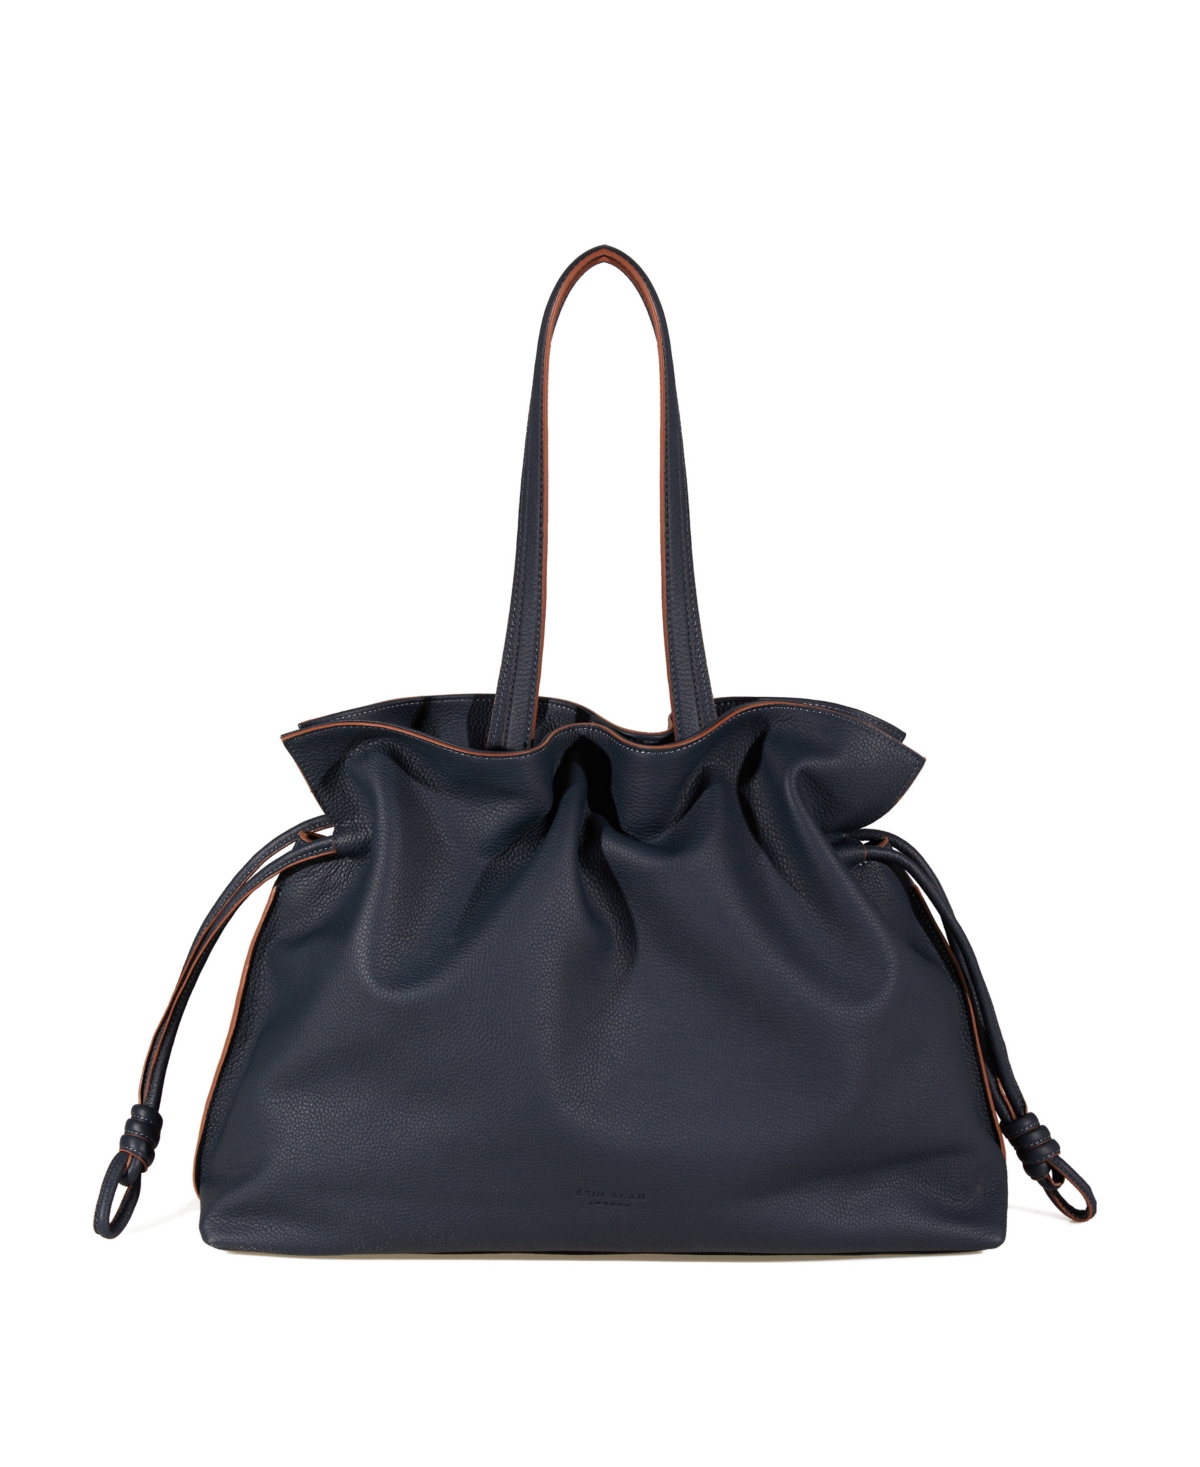 Esin Akan Women's Emma Leather Tote Bag